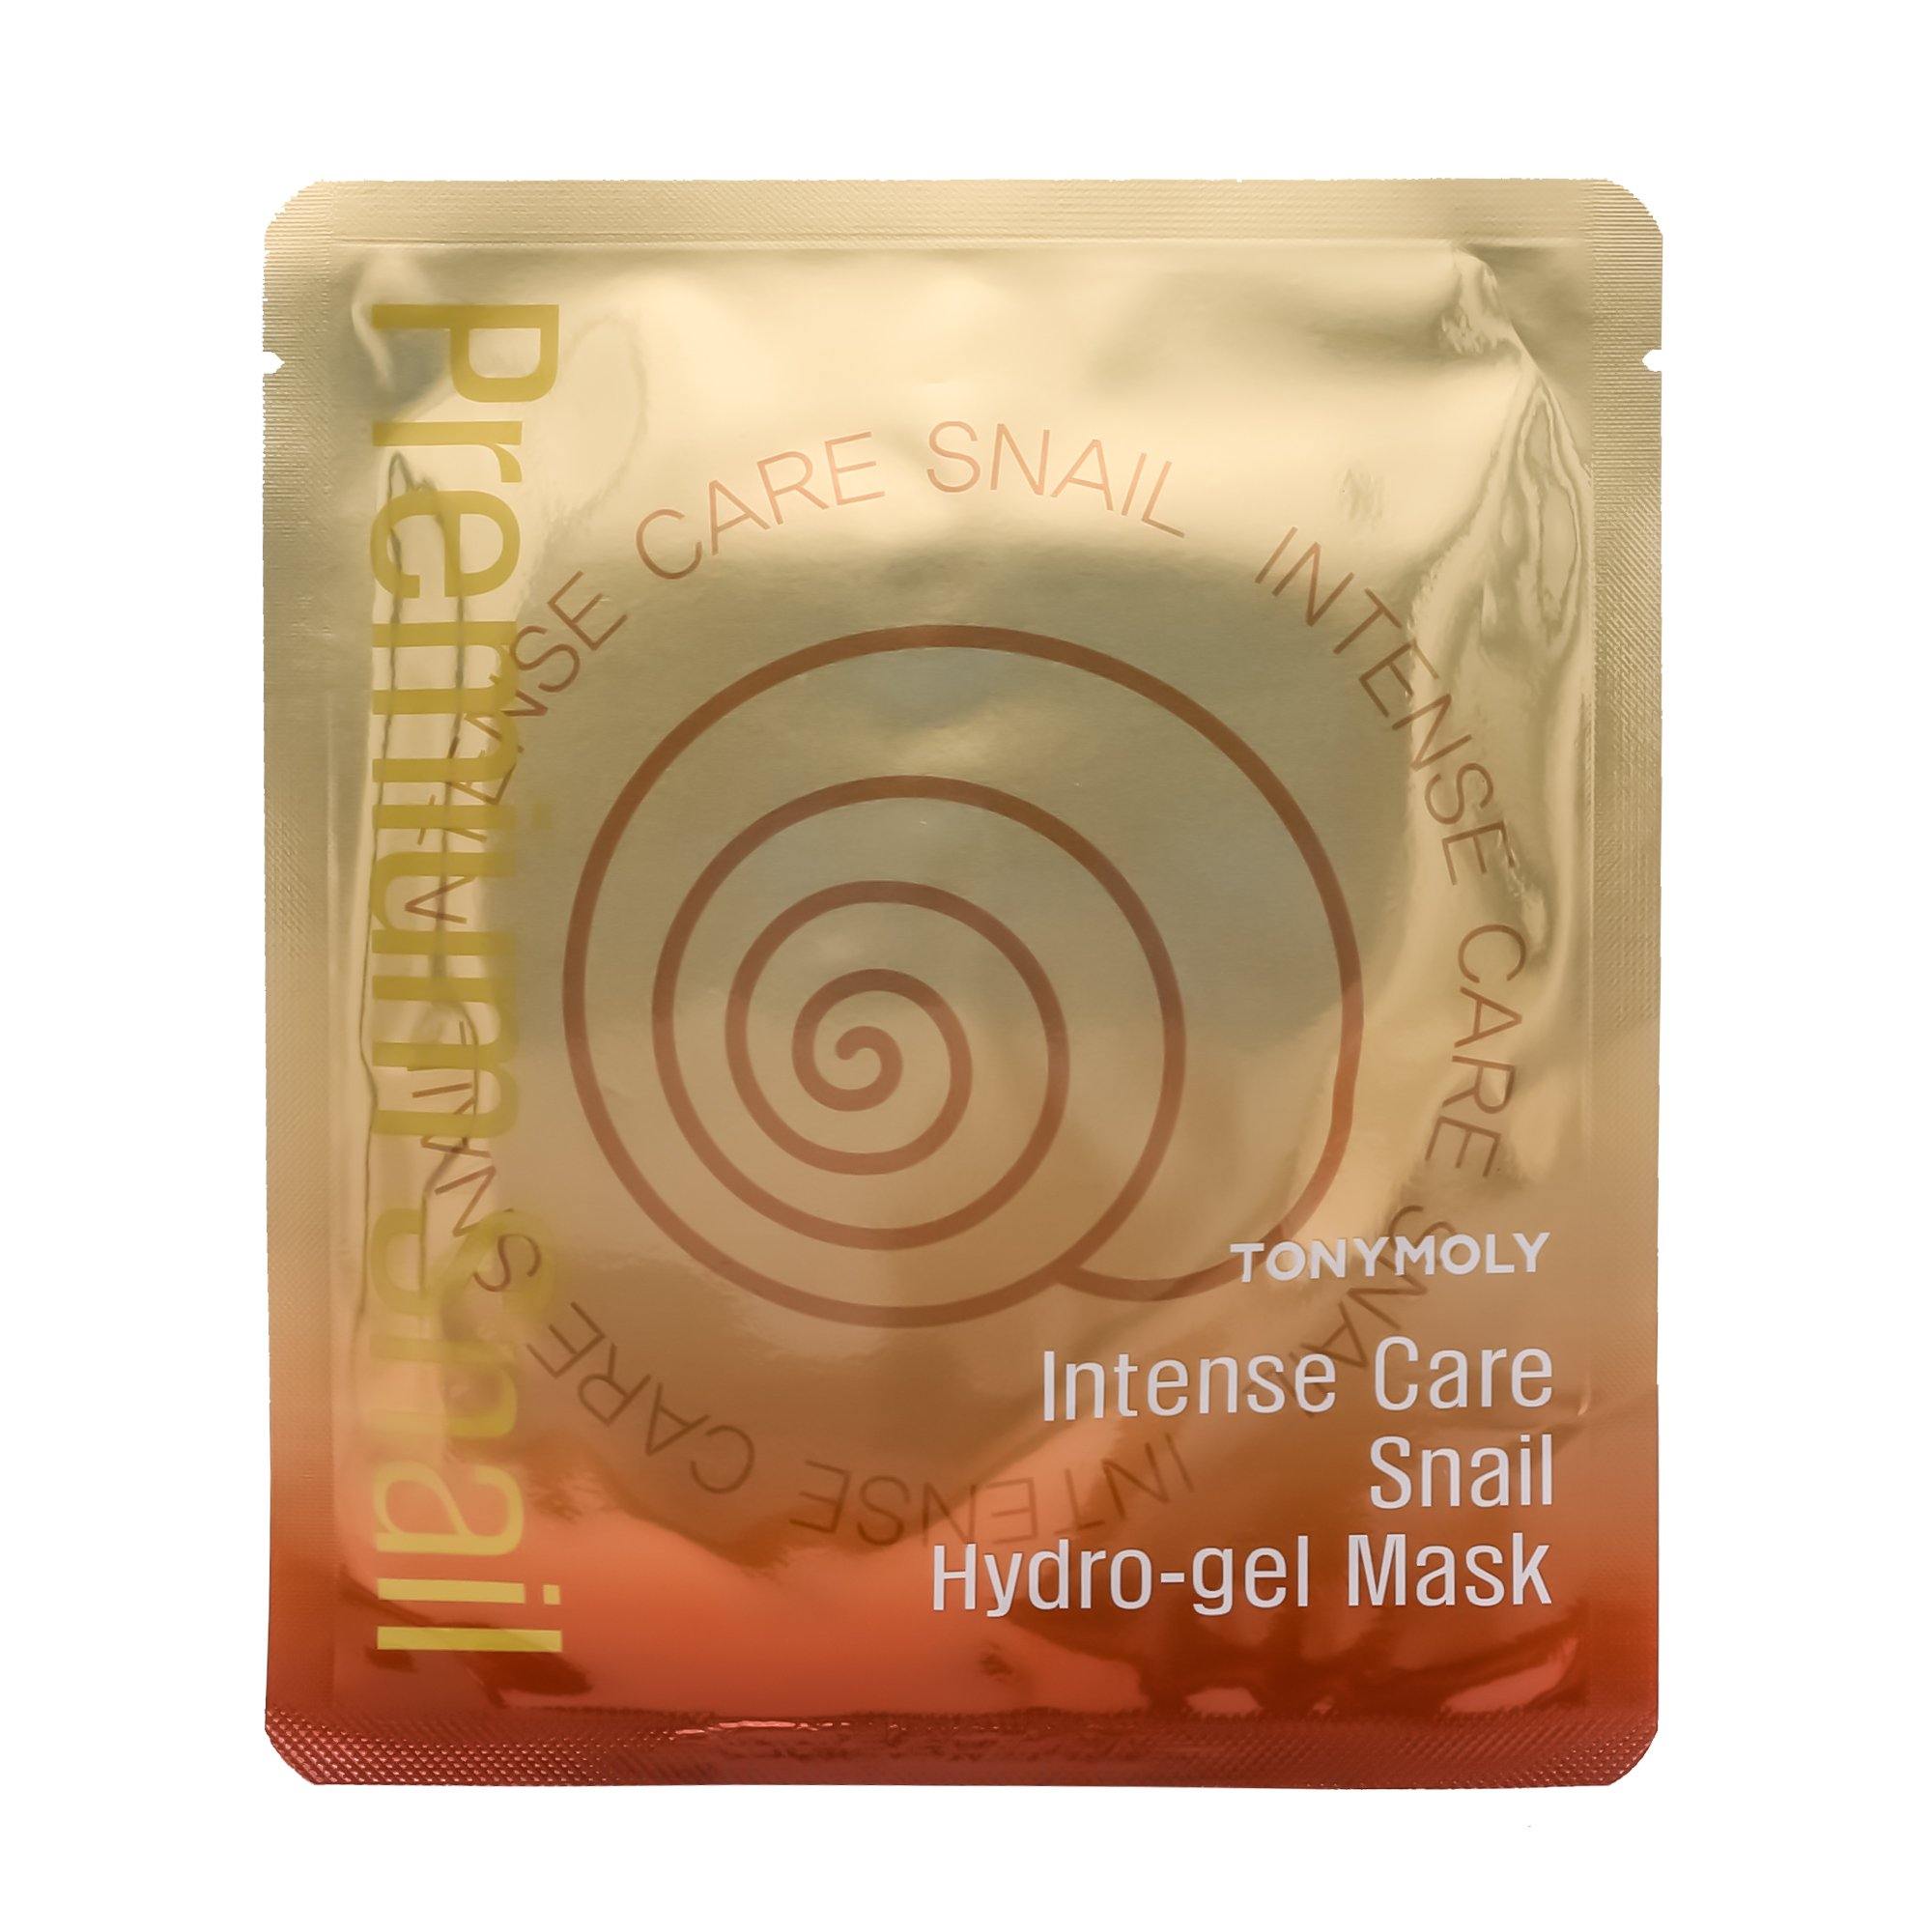 TONYMOLY Intense Care Snail Hydro-gel Mask (Premium Snail) Sheet Mask - TONYMOLY OFFICIAL